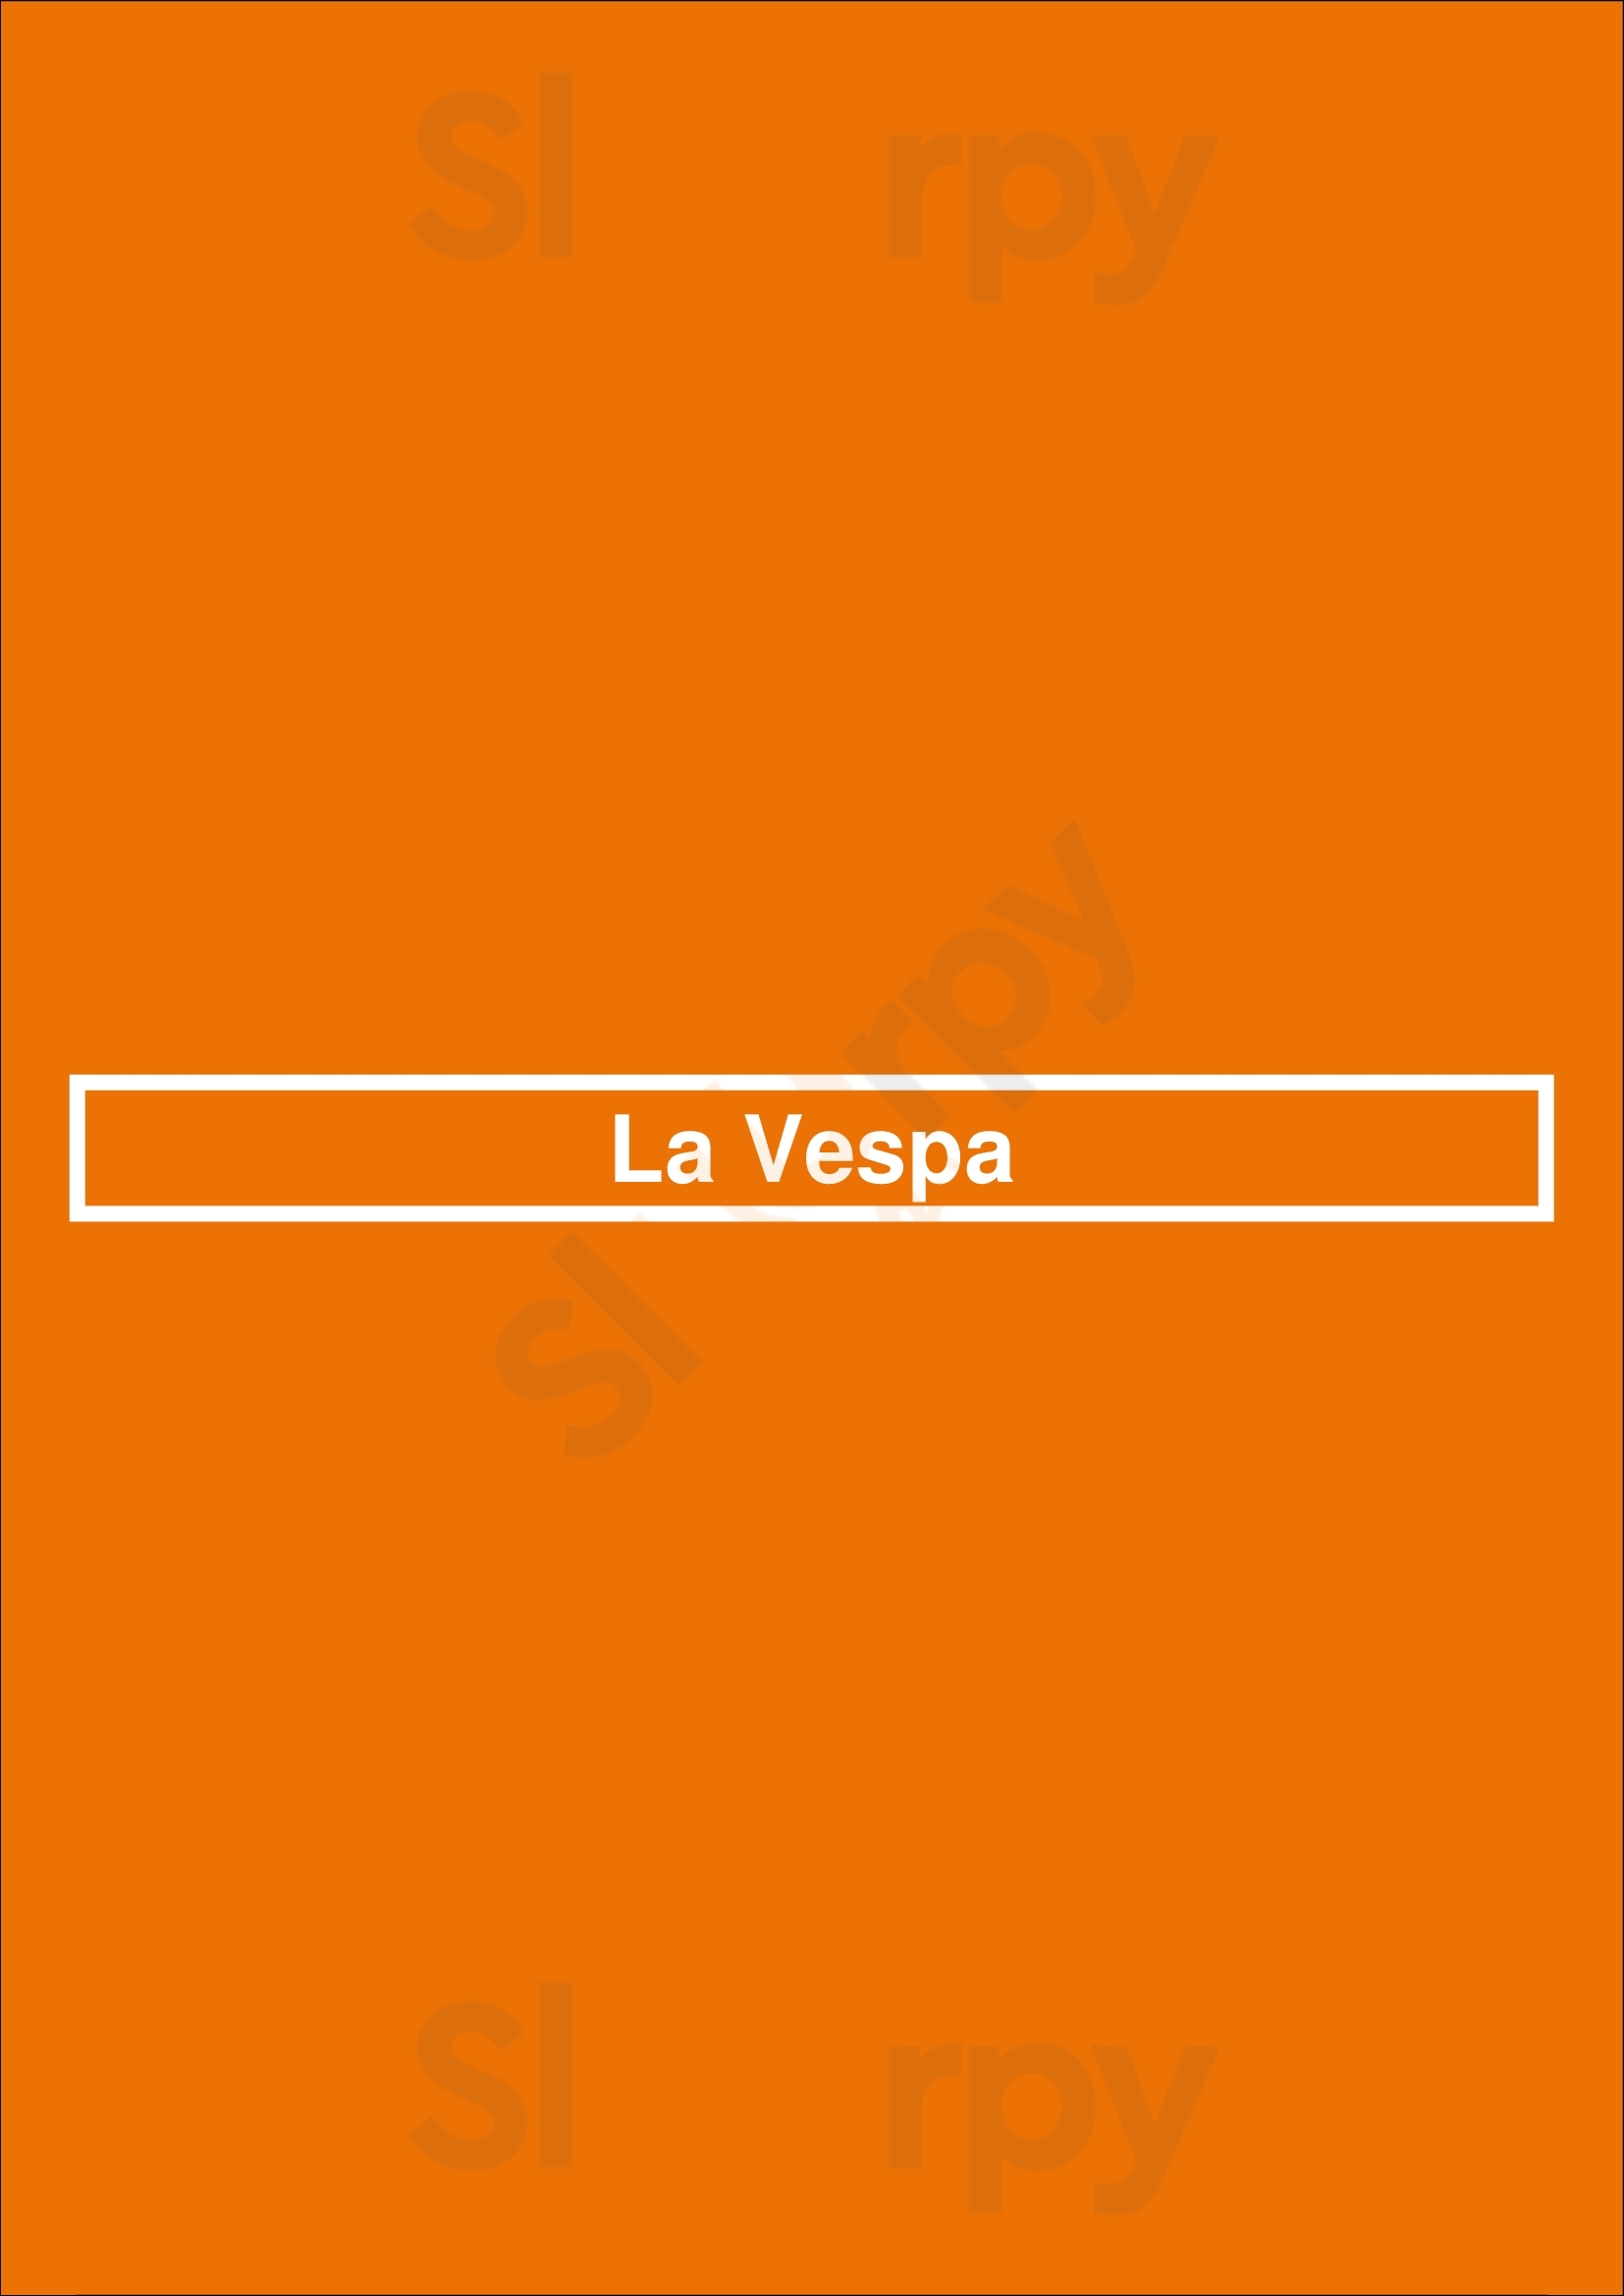 La Vespa Laren Menu - 1